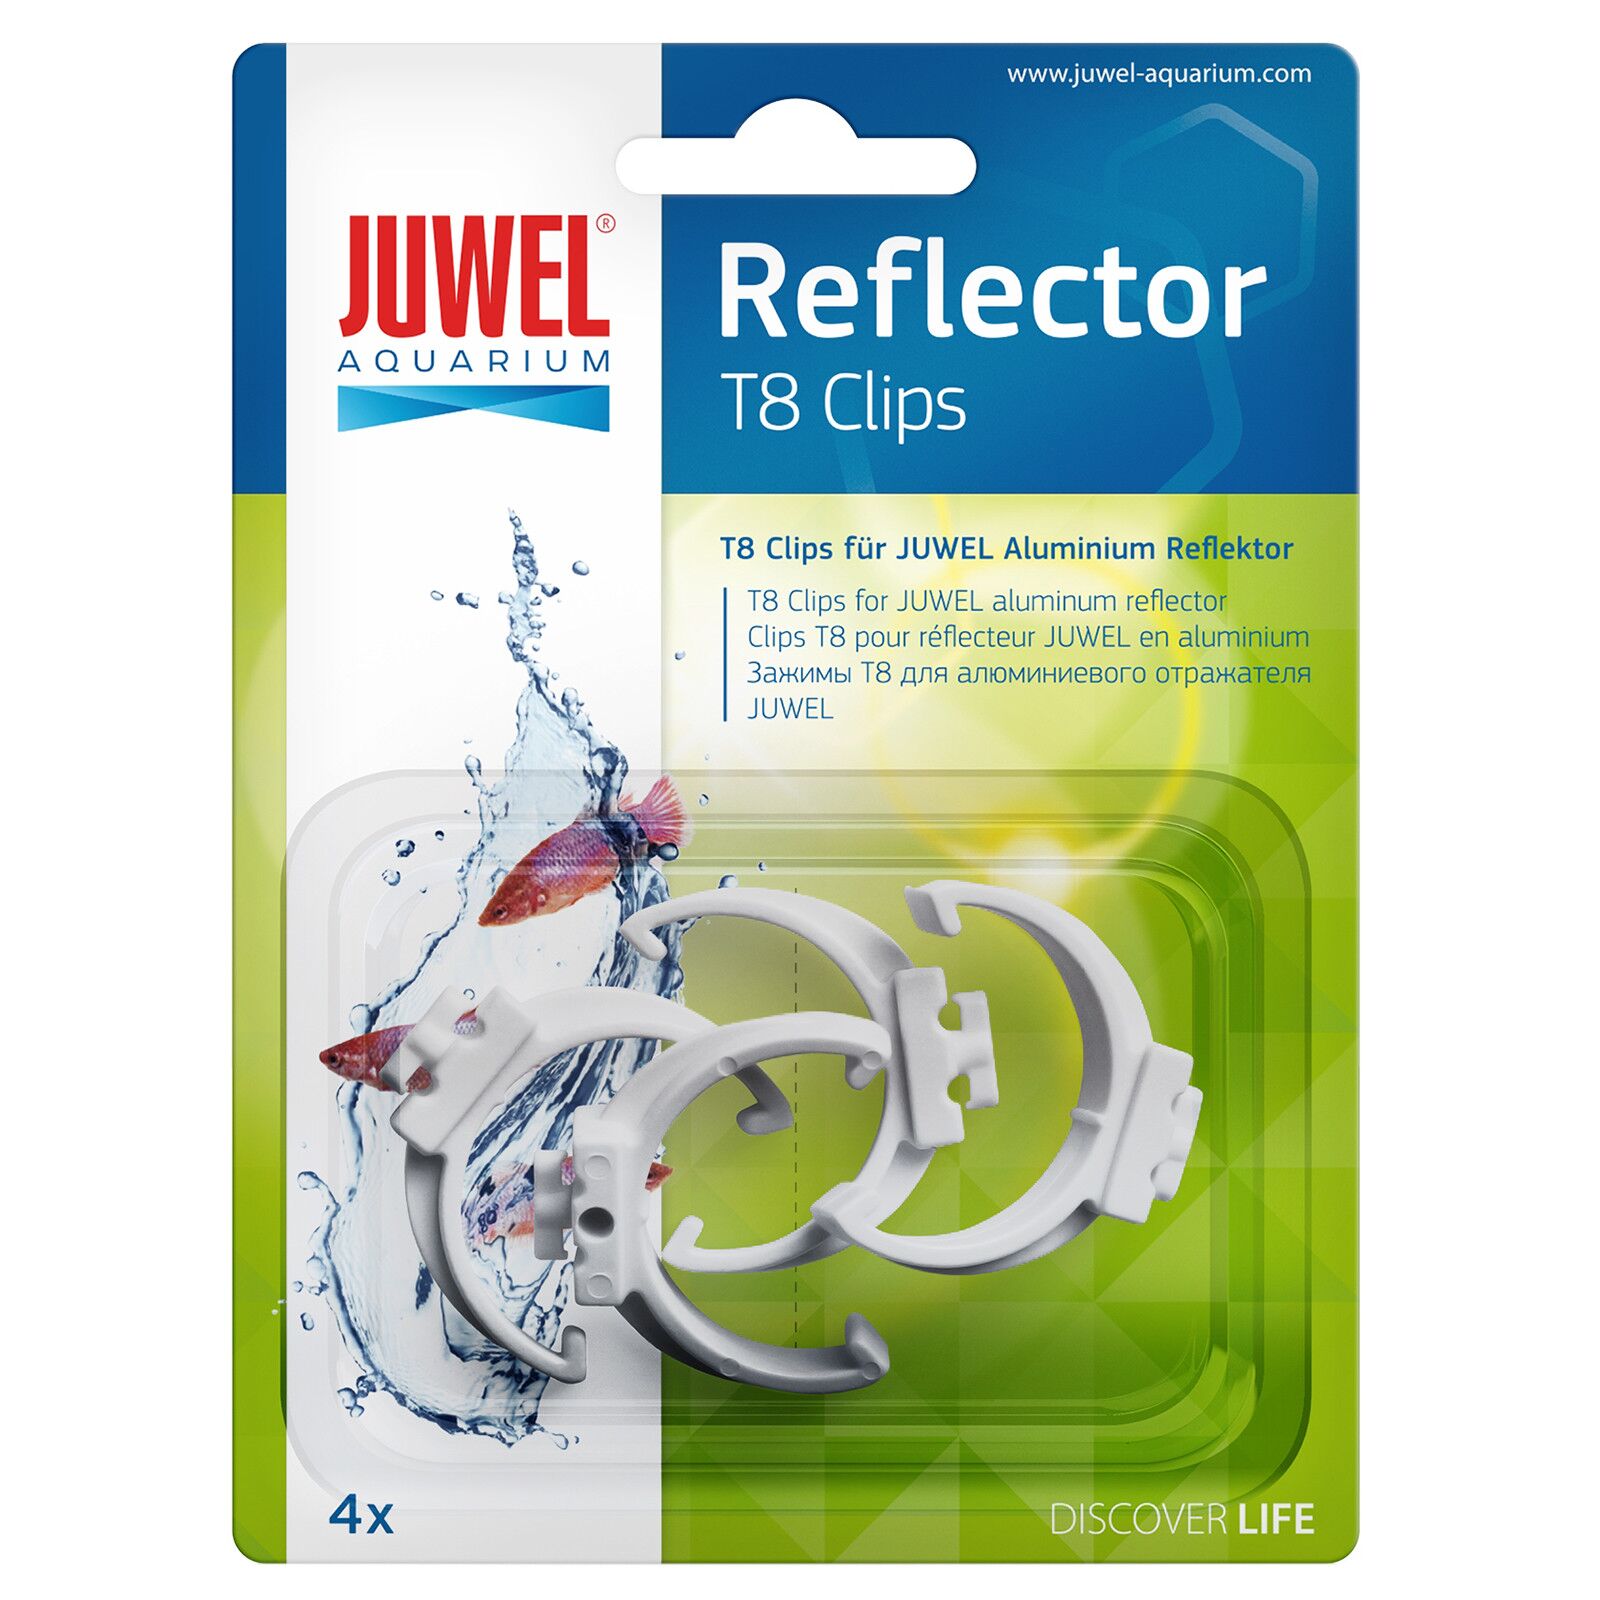 fontein Geleend hoop Juwel - Reflector Clips - T8 - 4x | Aquasabi - Aquascaping Shop